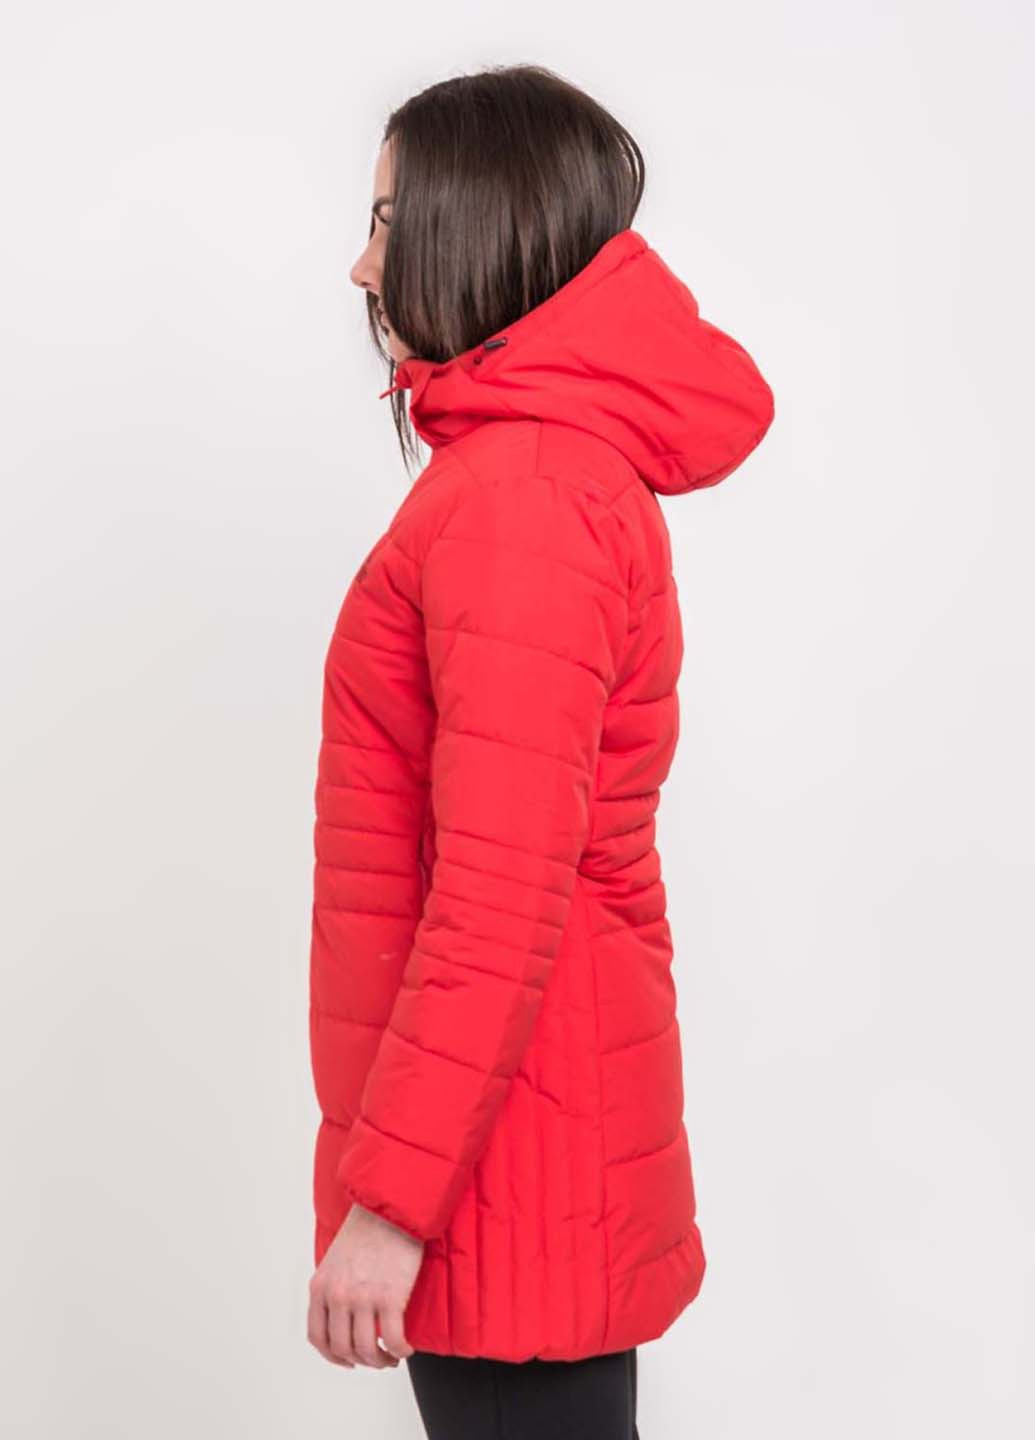 Оранжево-красная зимняя куртка Peak